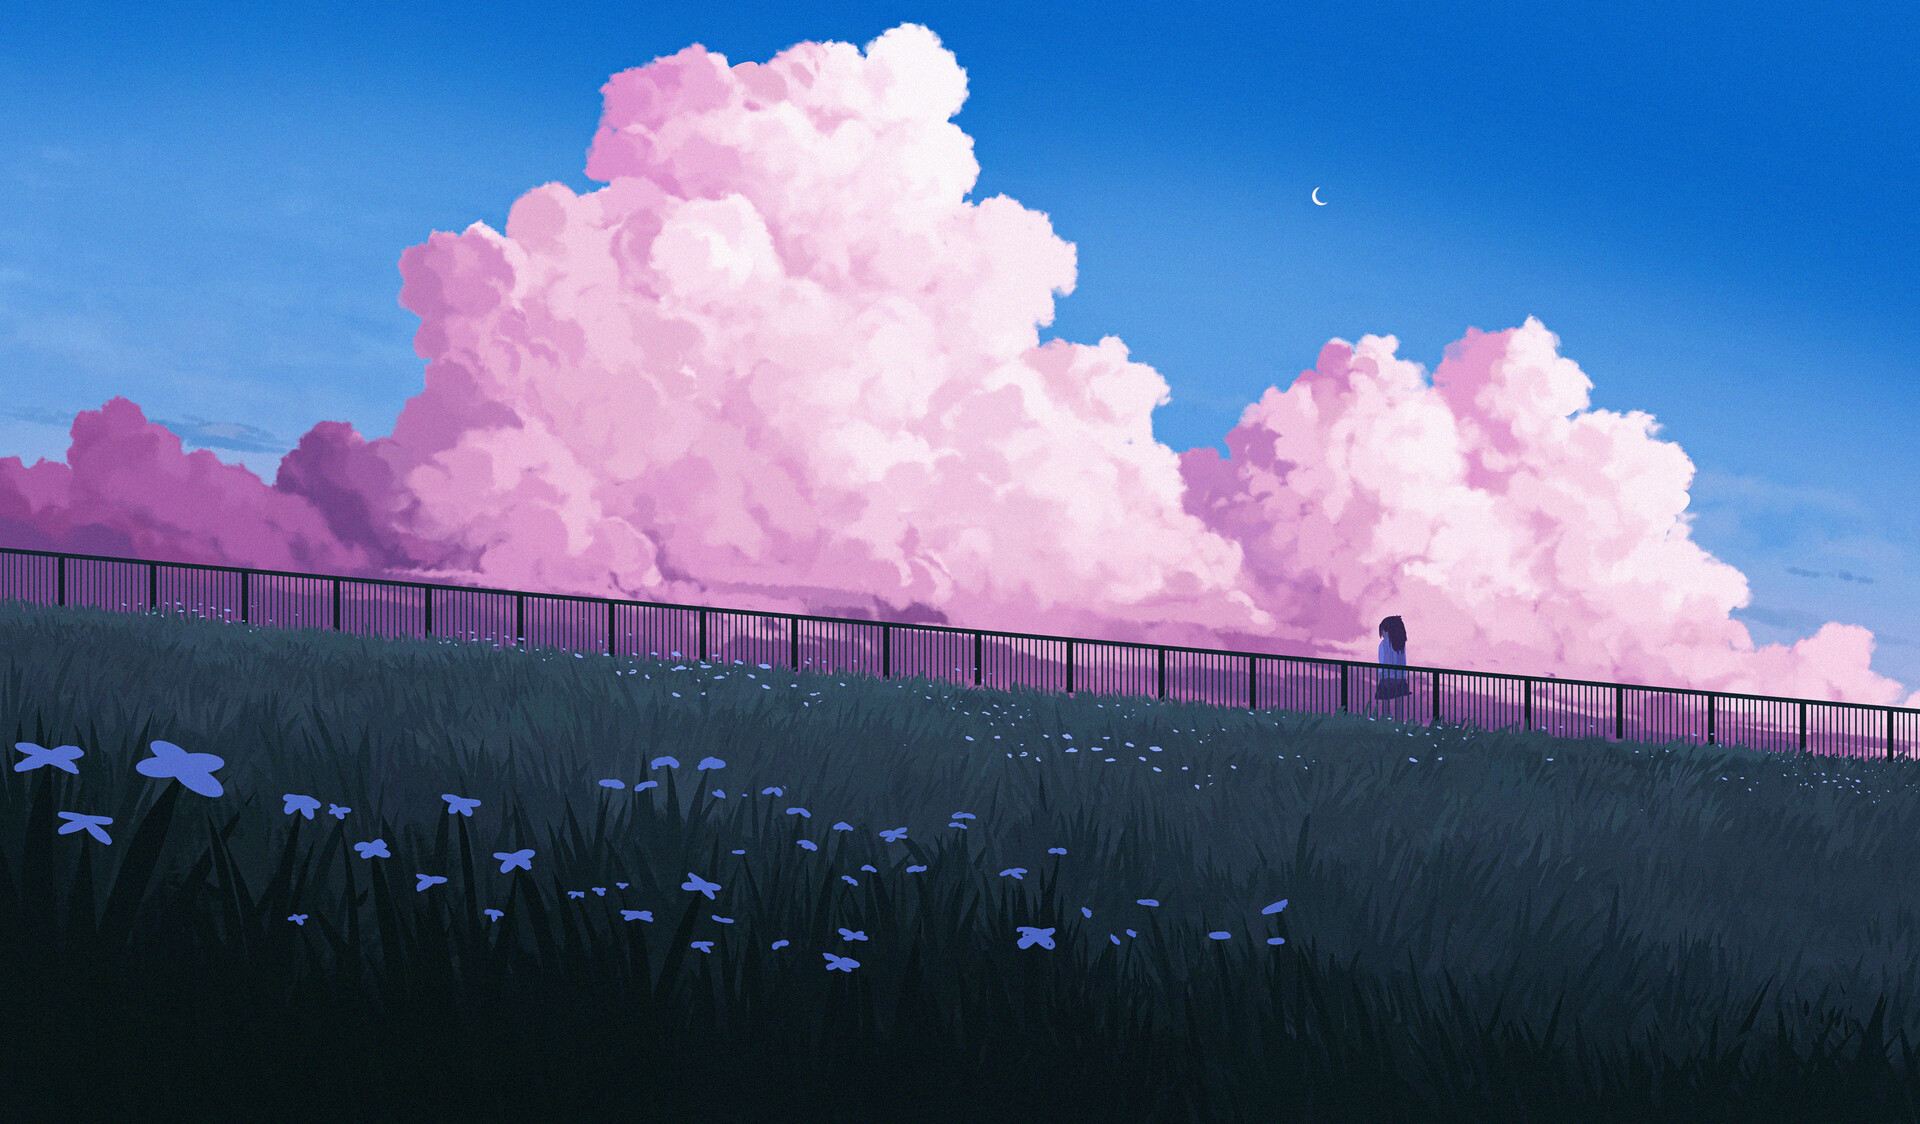 General 1920x1124 digital art clouds pink flowers alone Moon railing field